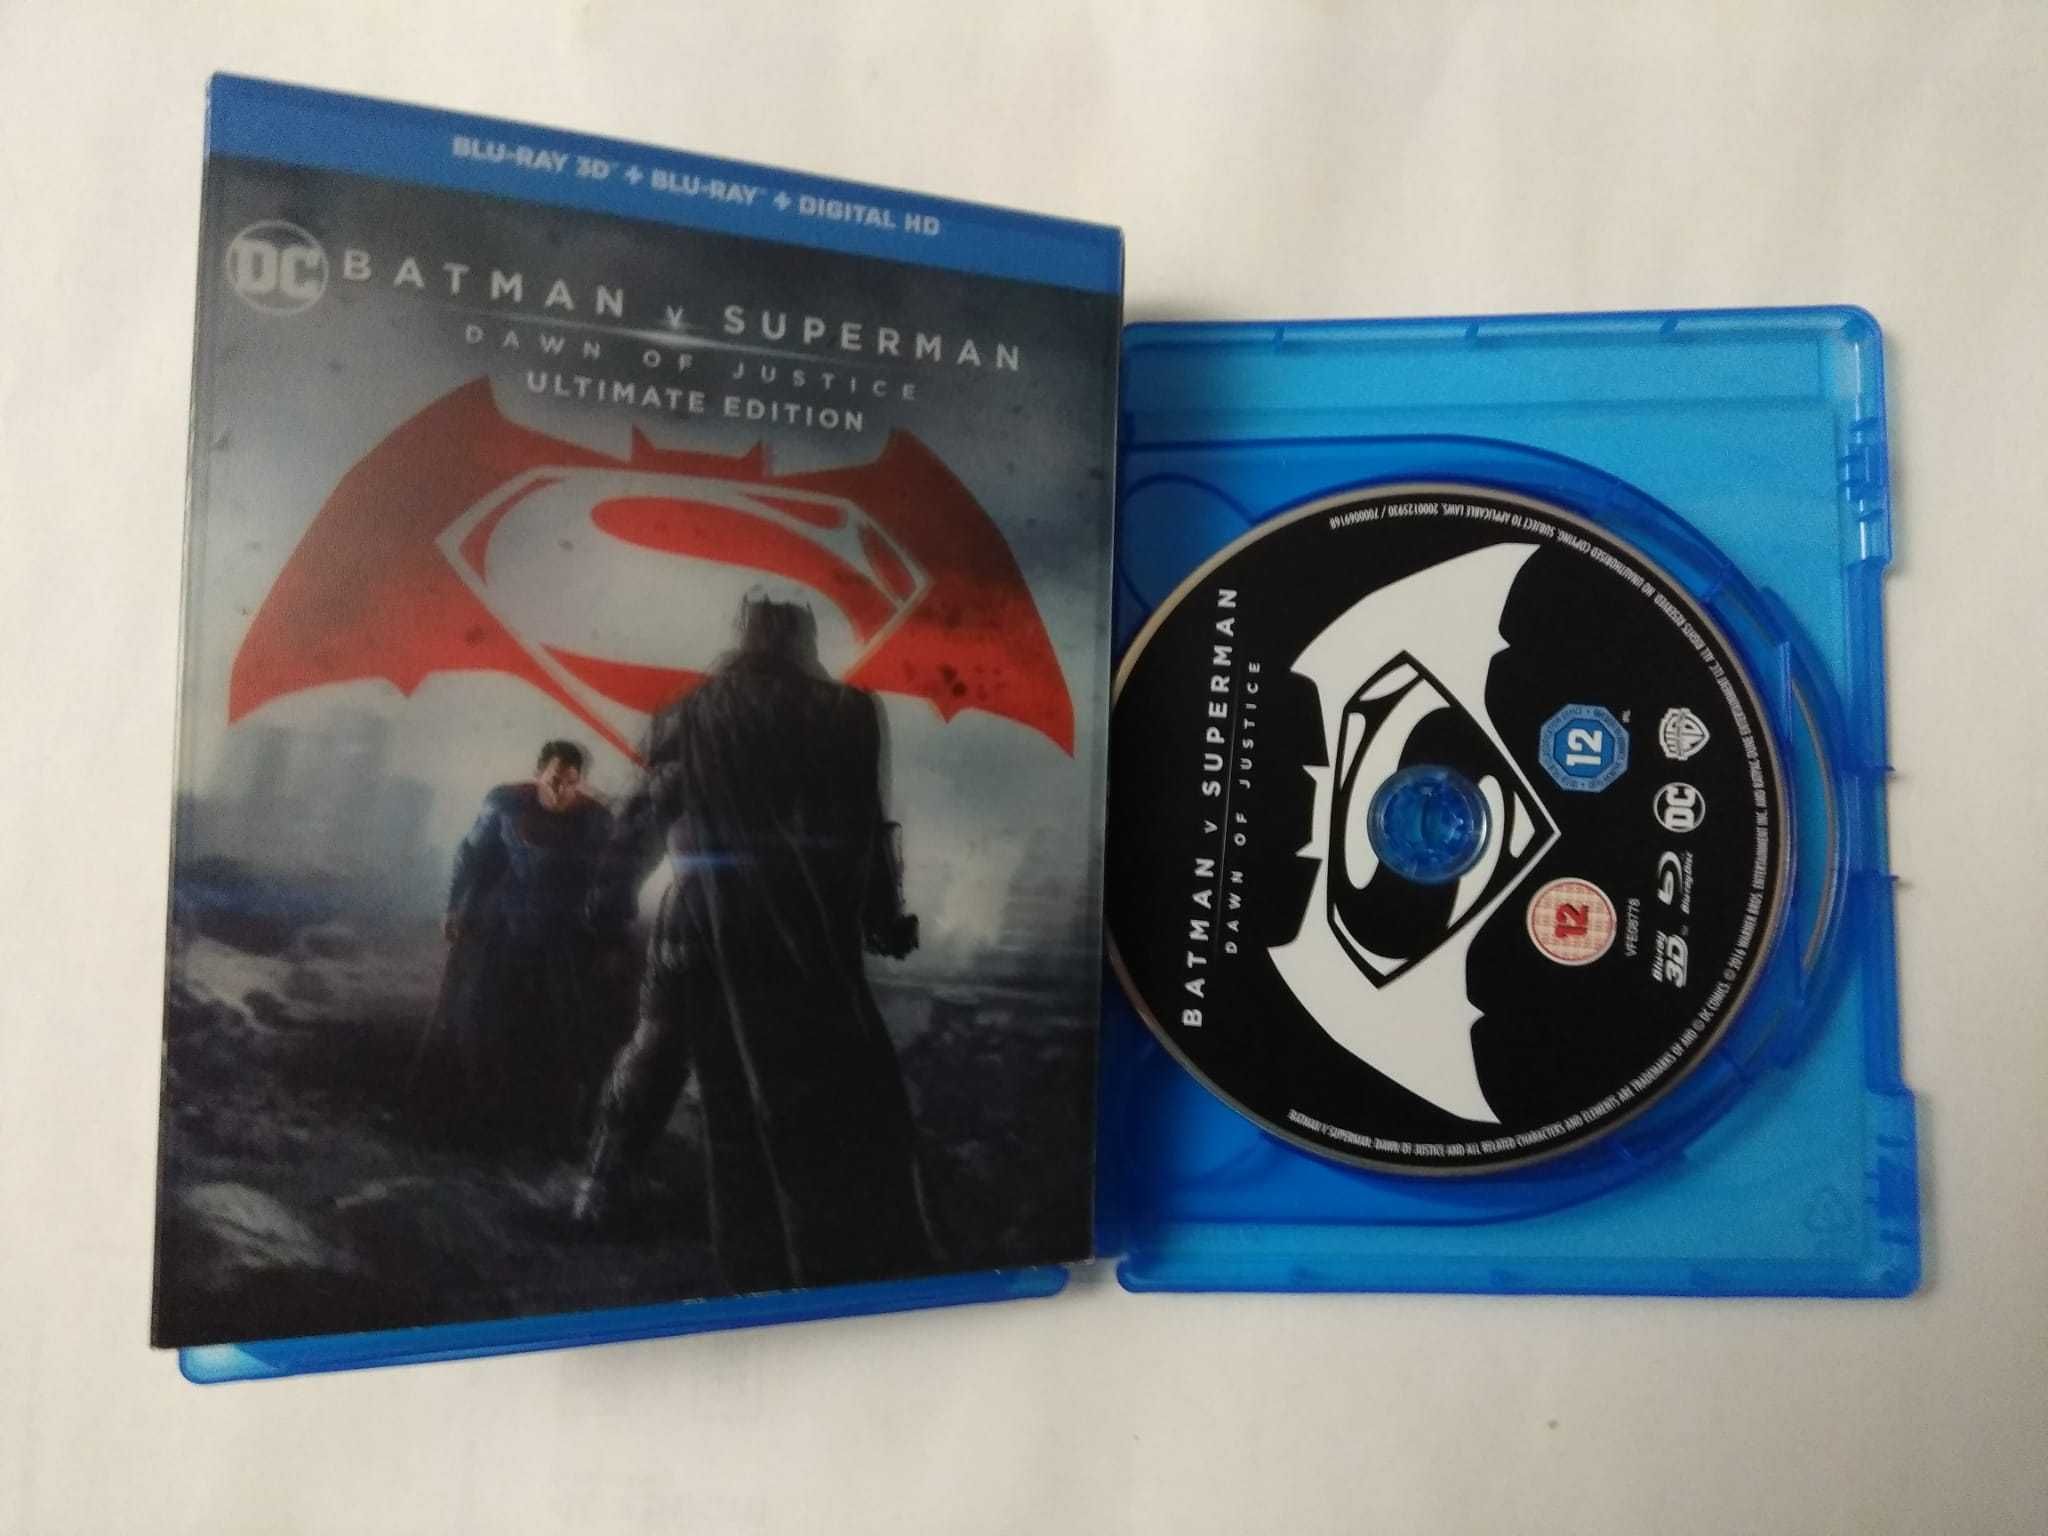 Batman vs Superman - Blu-ray 3d + Blu-ray lenticular